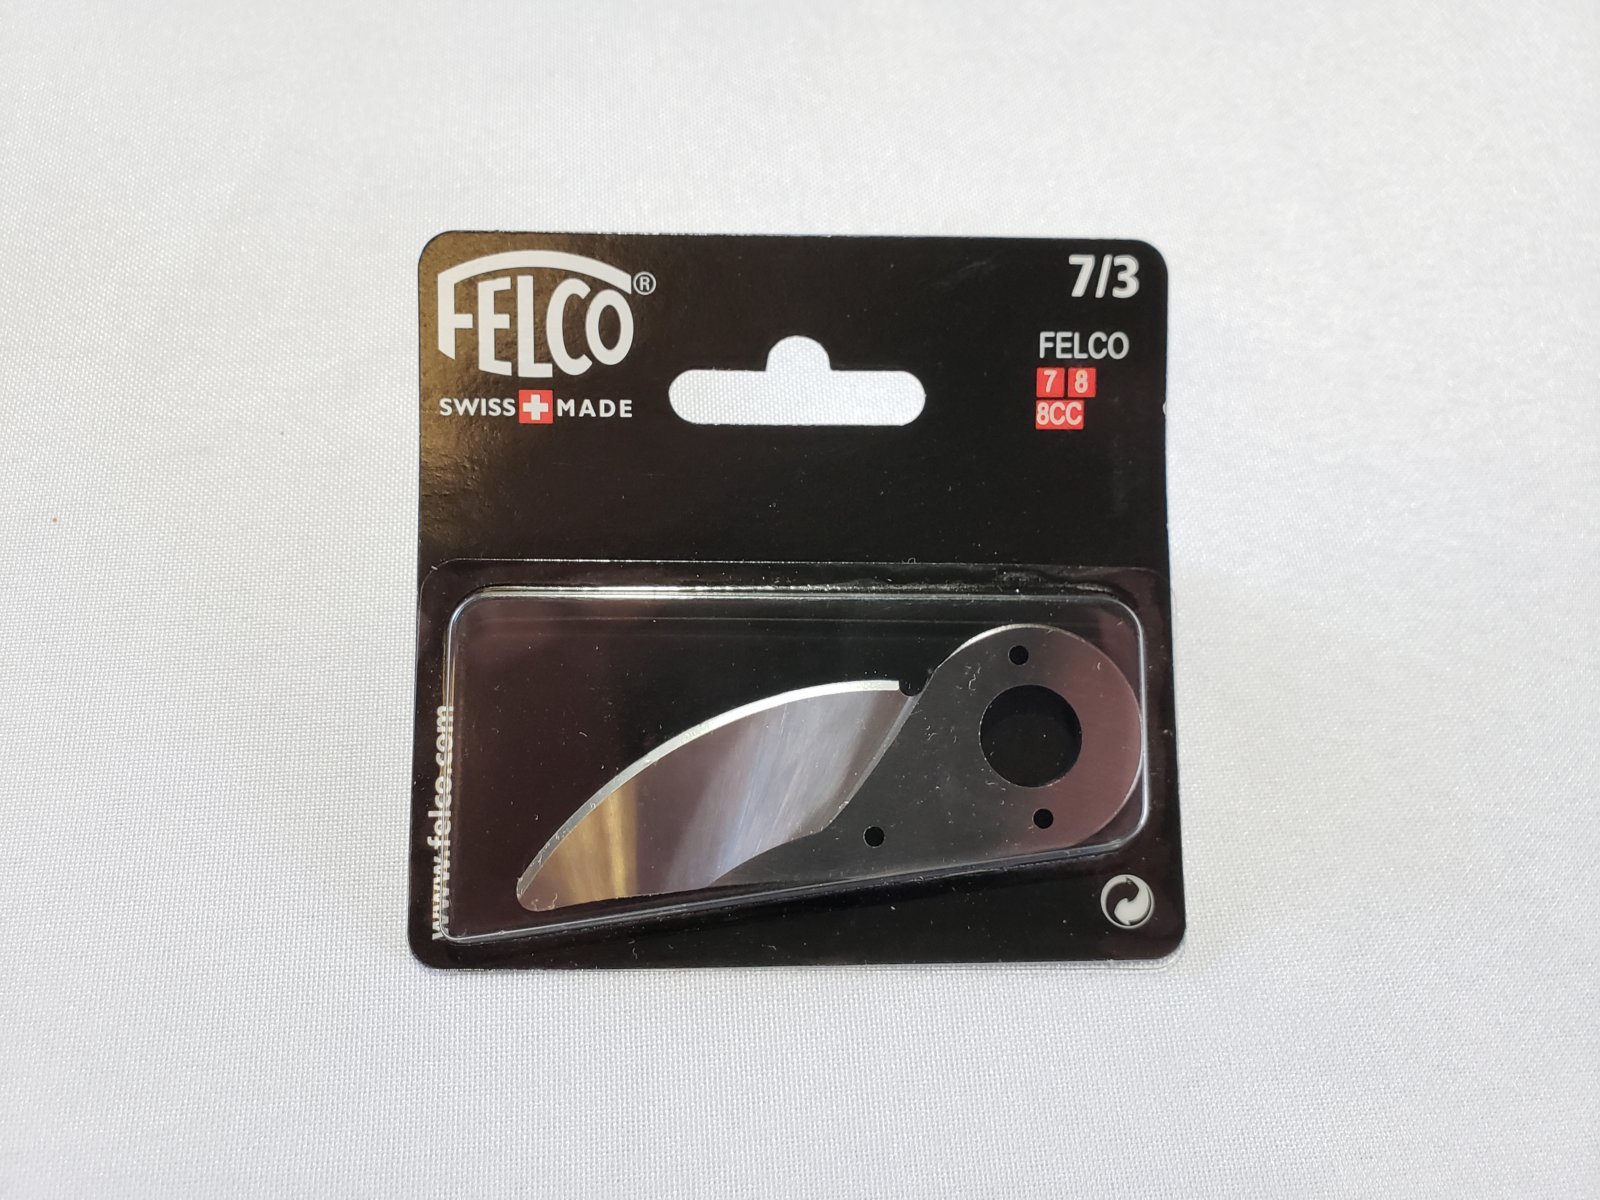 Felco Replacement Blades 7/3 For Felco No 7 & 8 Shears